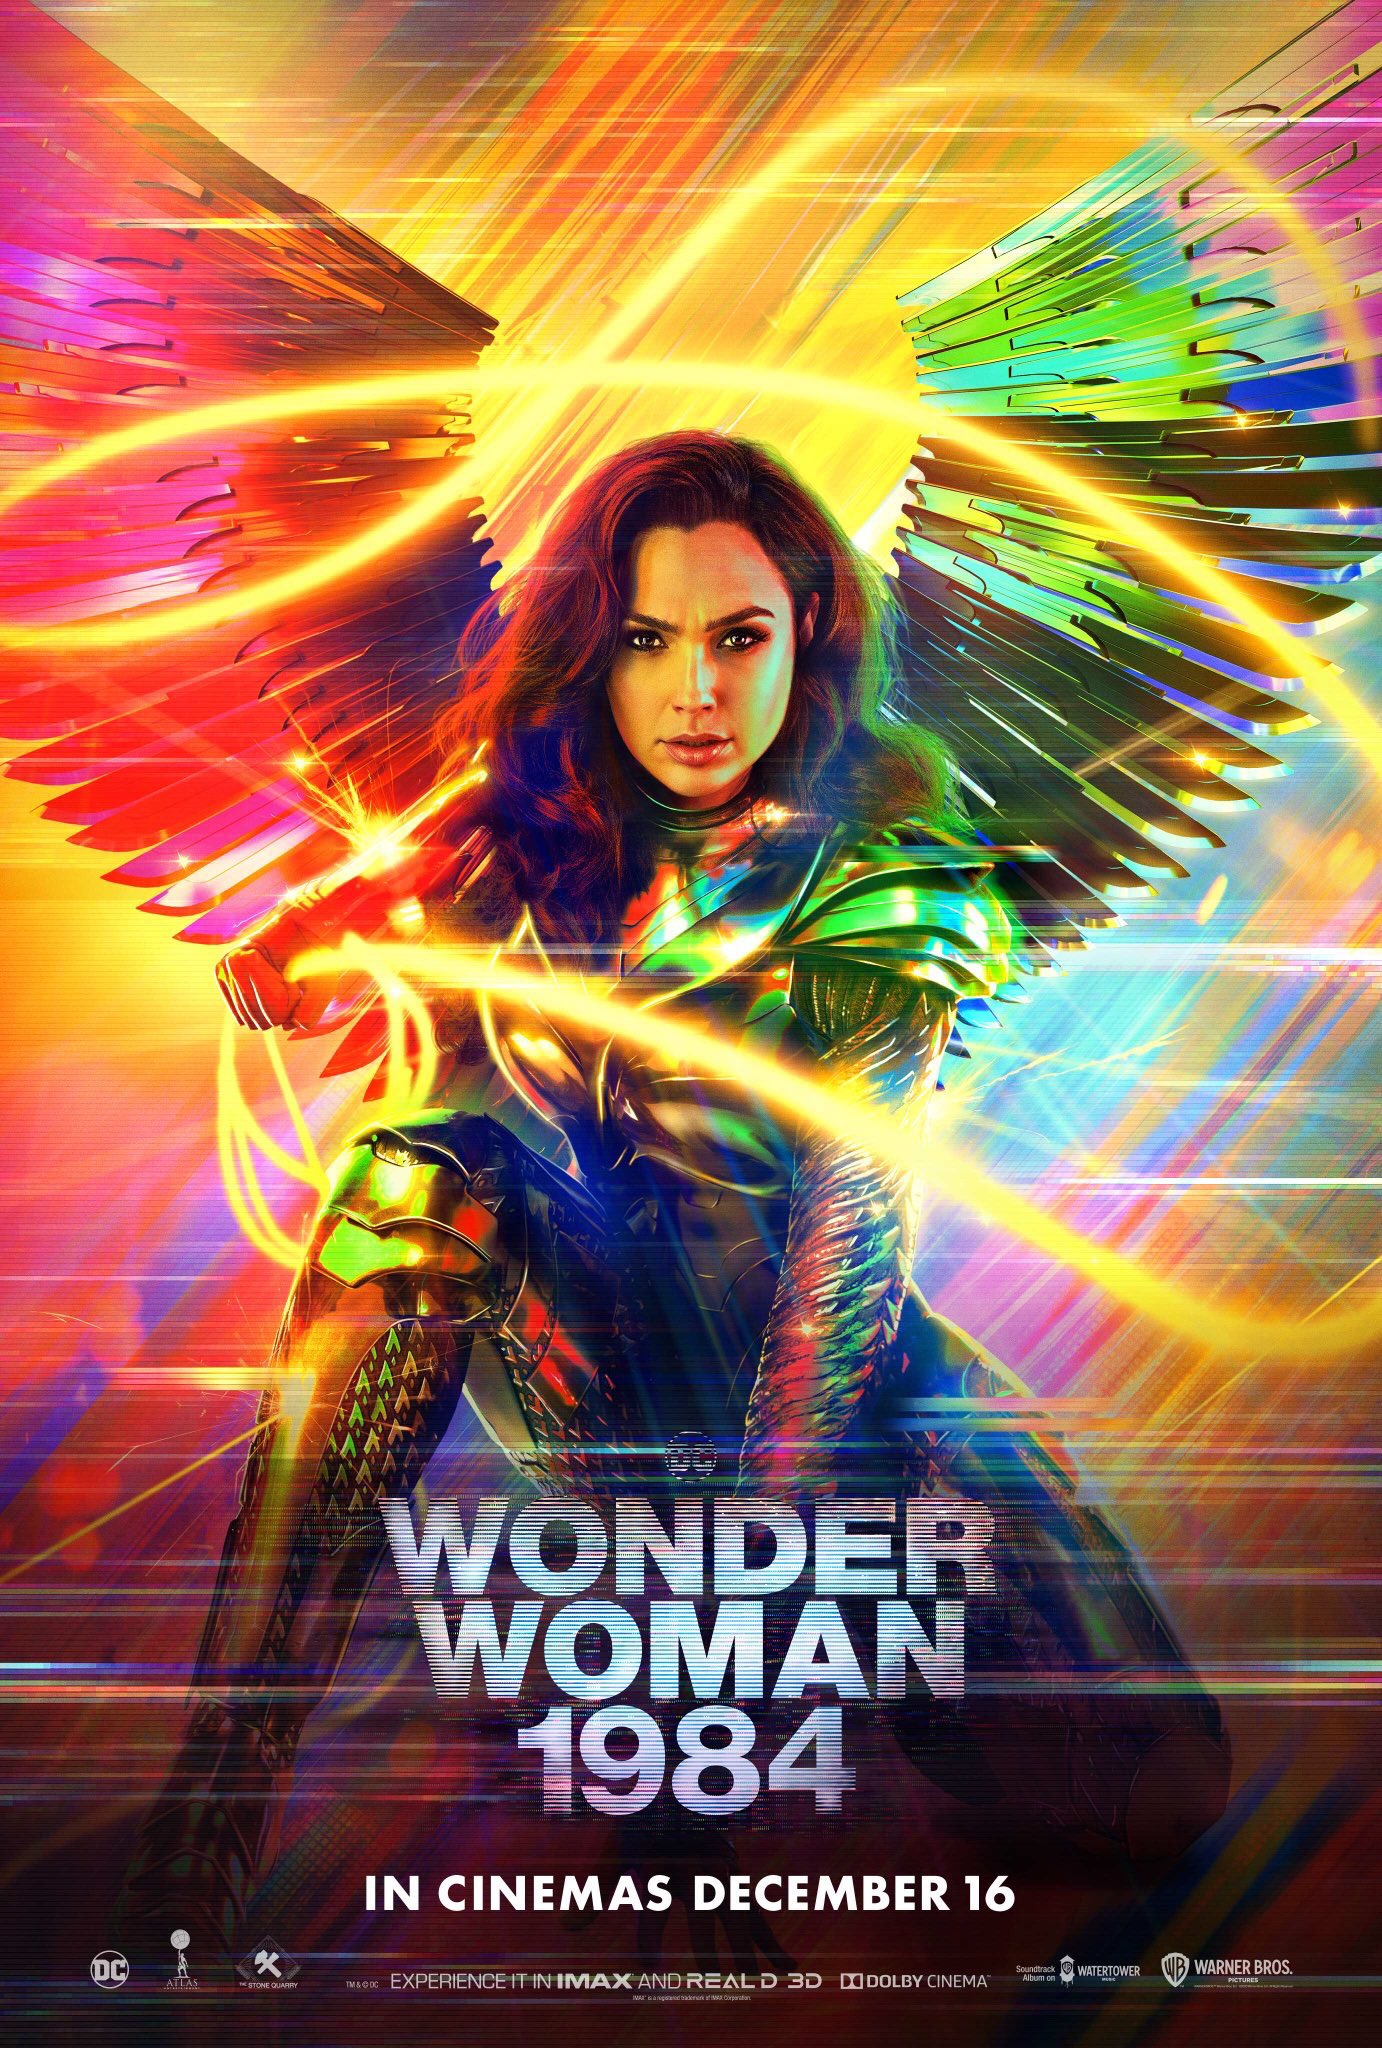 Wonder Woman 1984 international poster